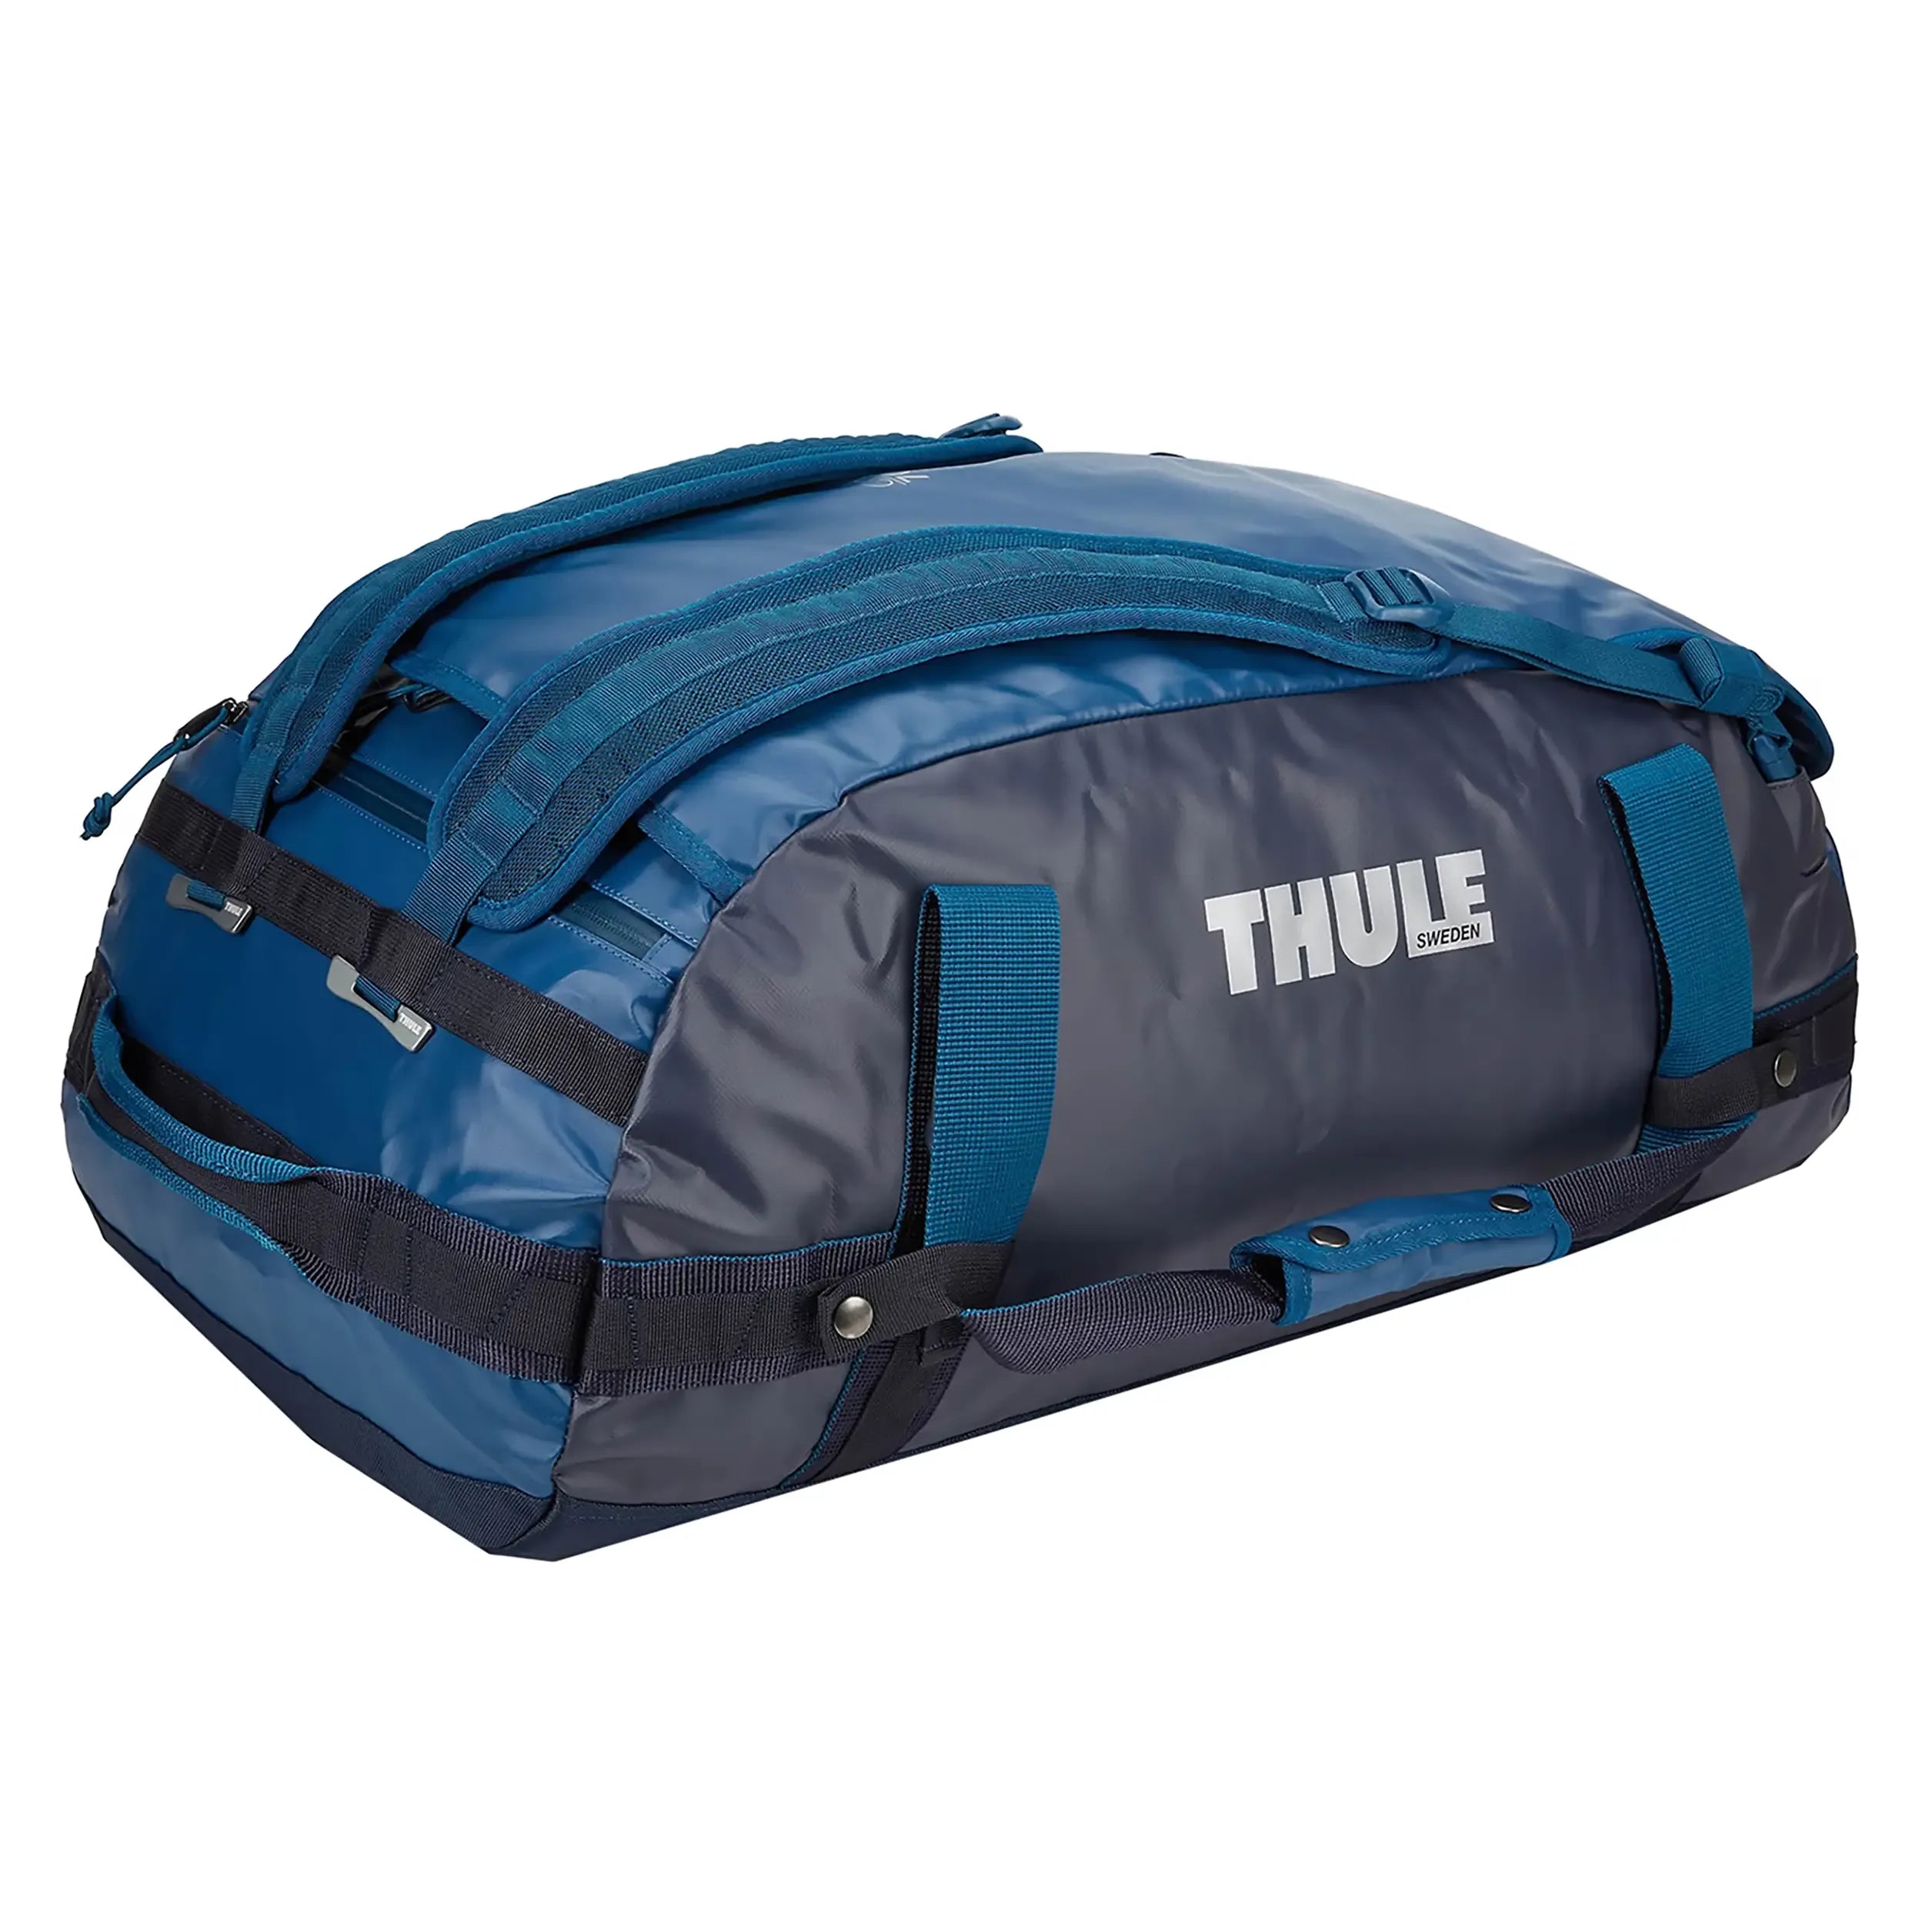 Thule Travel Chasm travel bag 74 cm - Poseidon